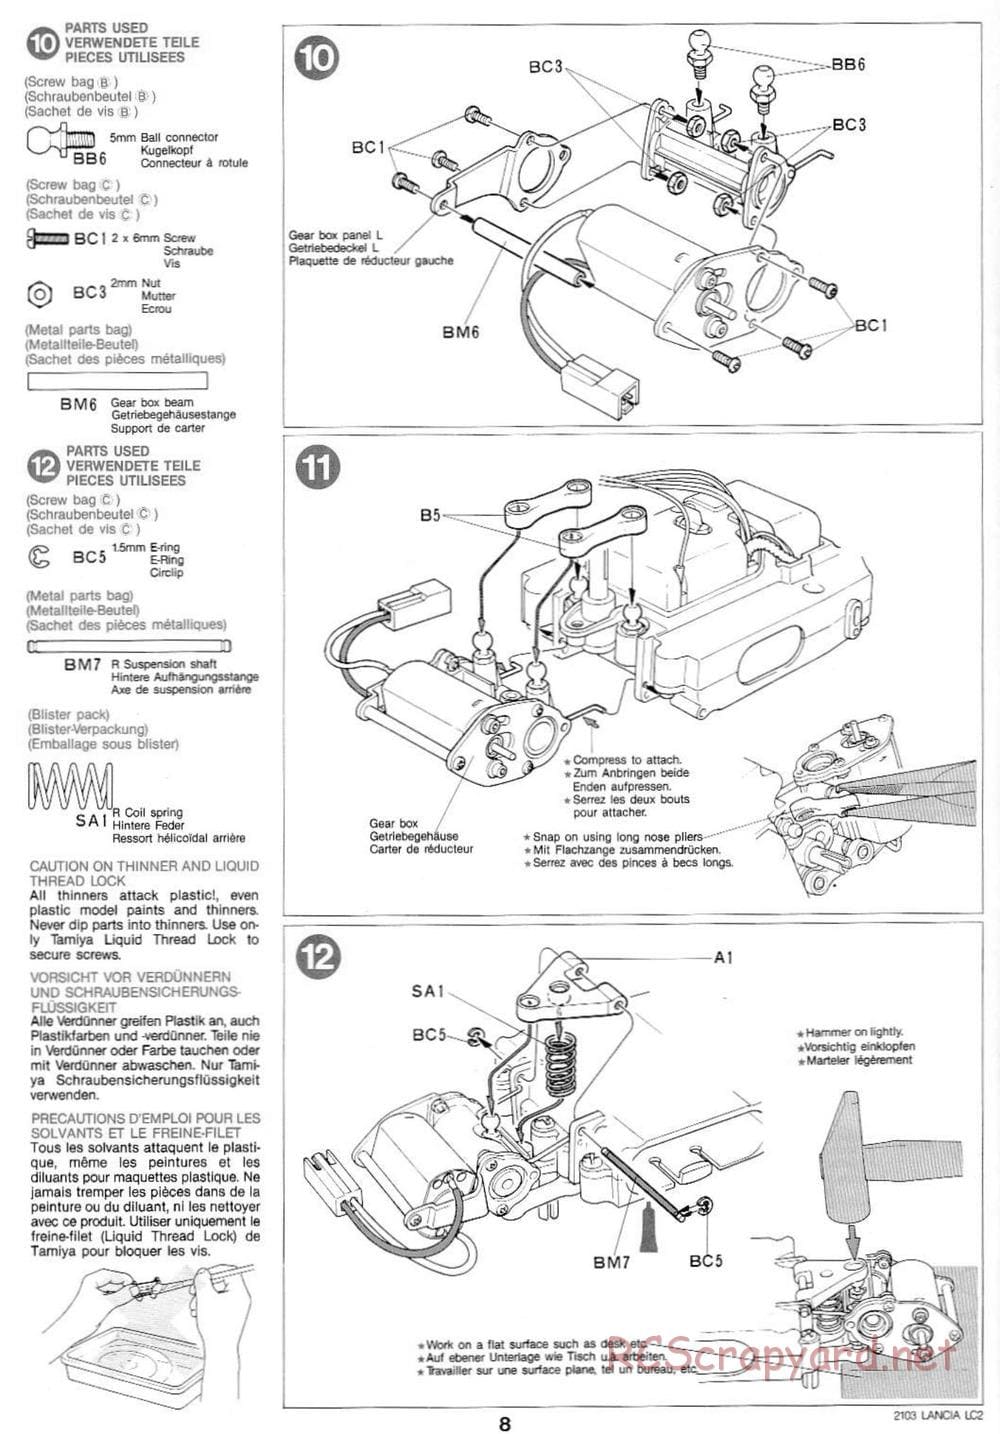 Tamiya - Tamtech - Lancia LC2 Chassis - Manual - Page 8